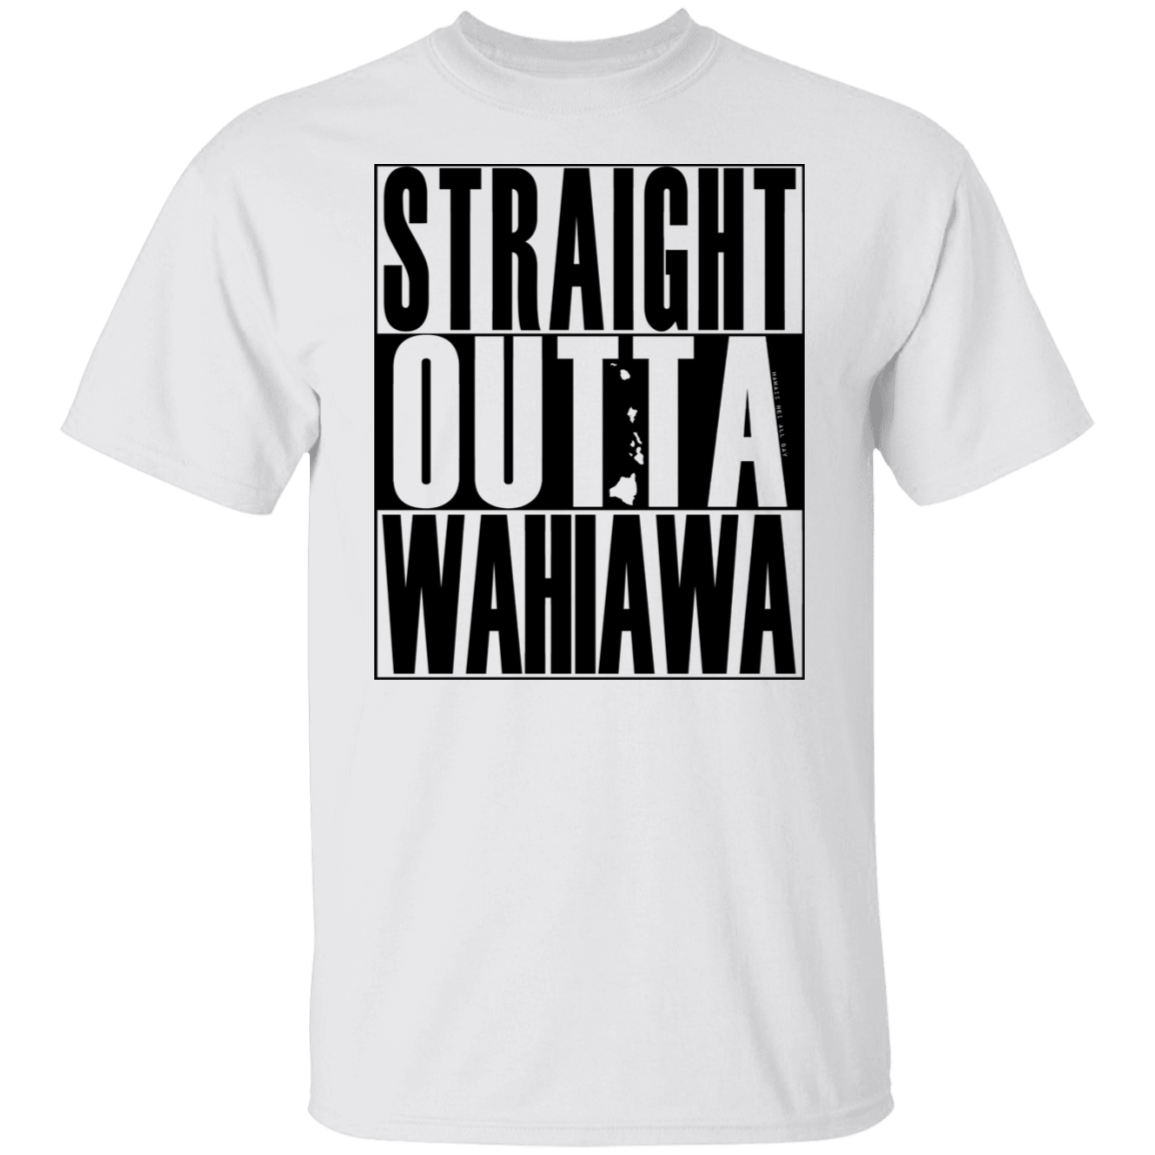 Straight Outta Wahiawa (black ink) T-Shirt